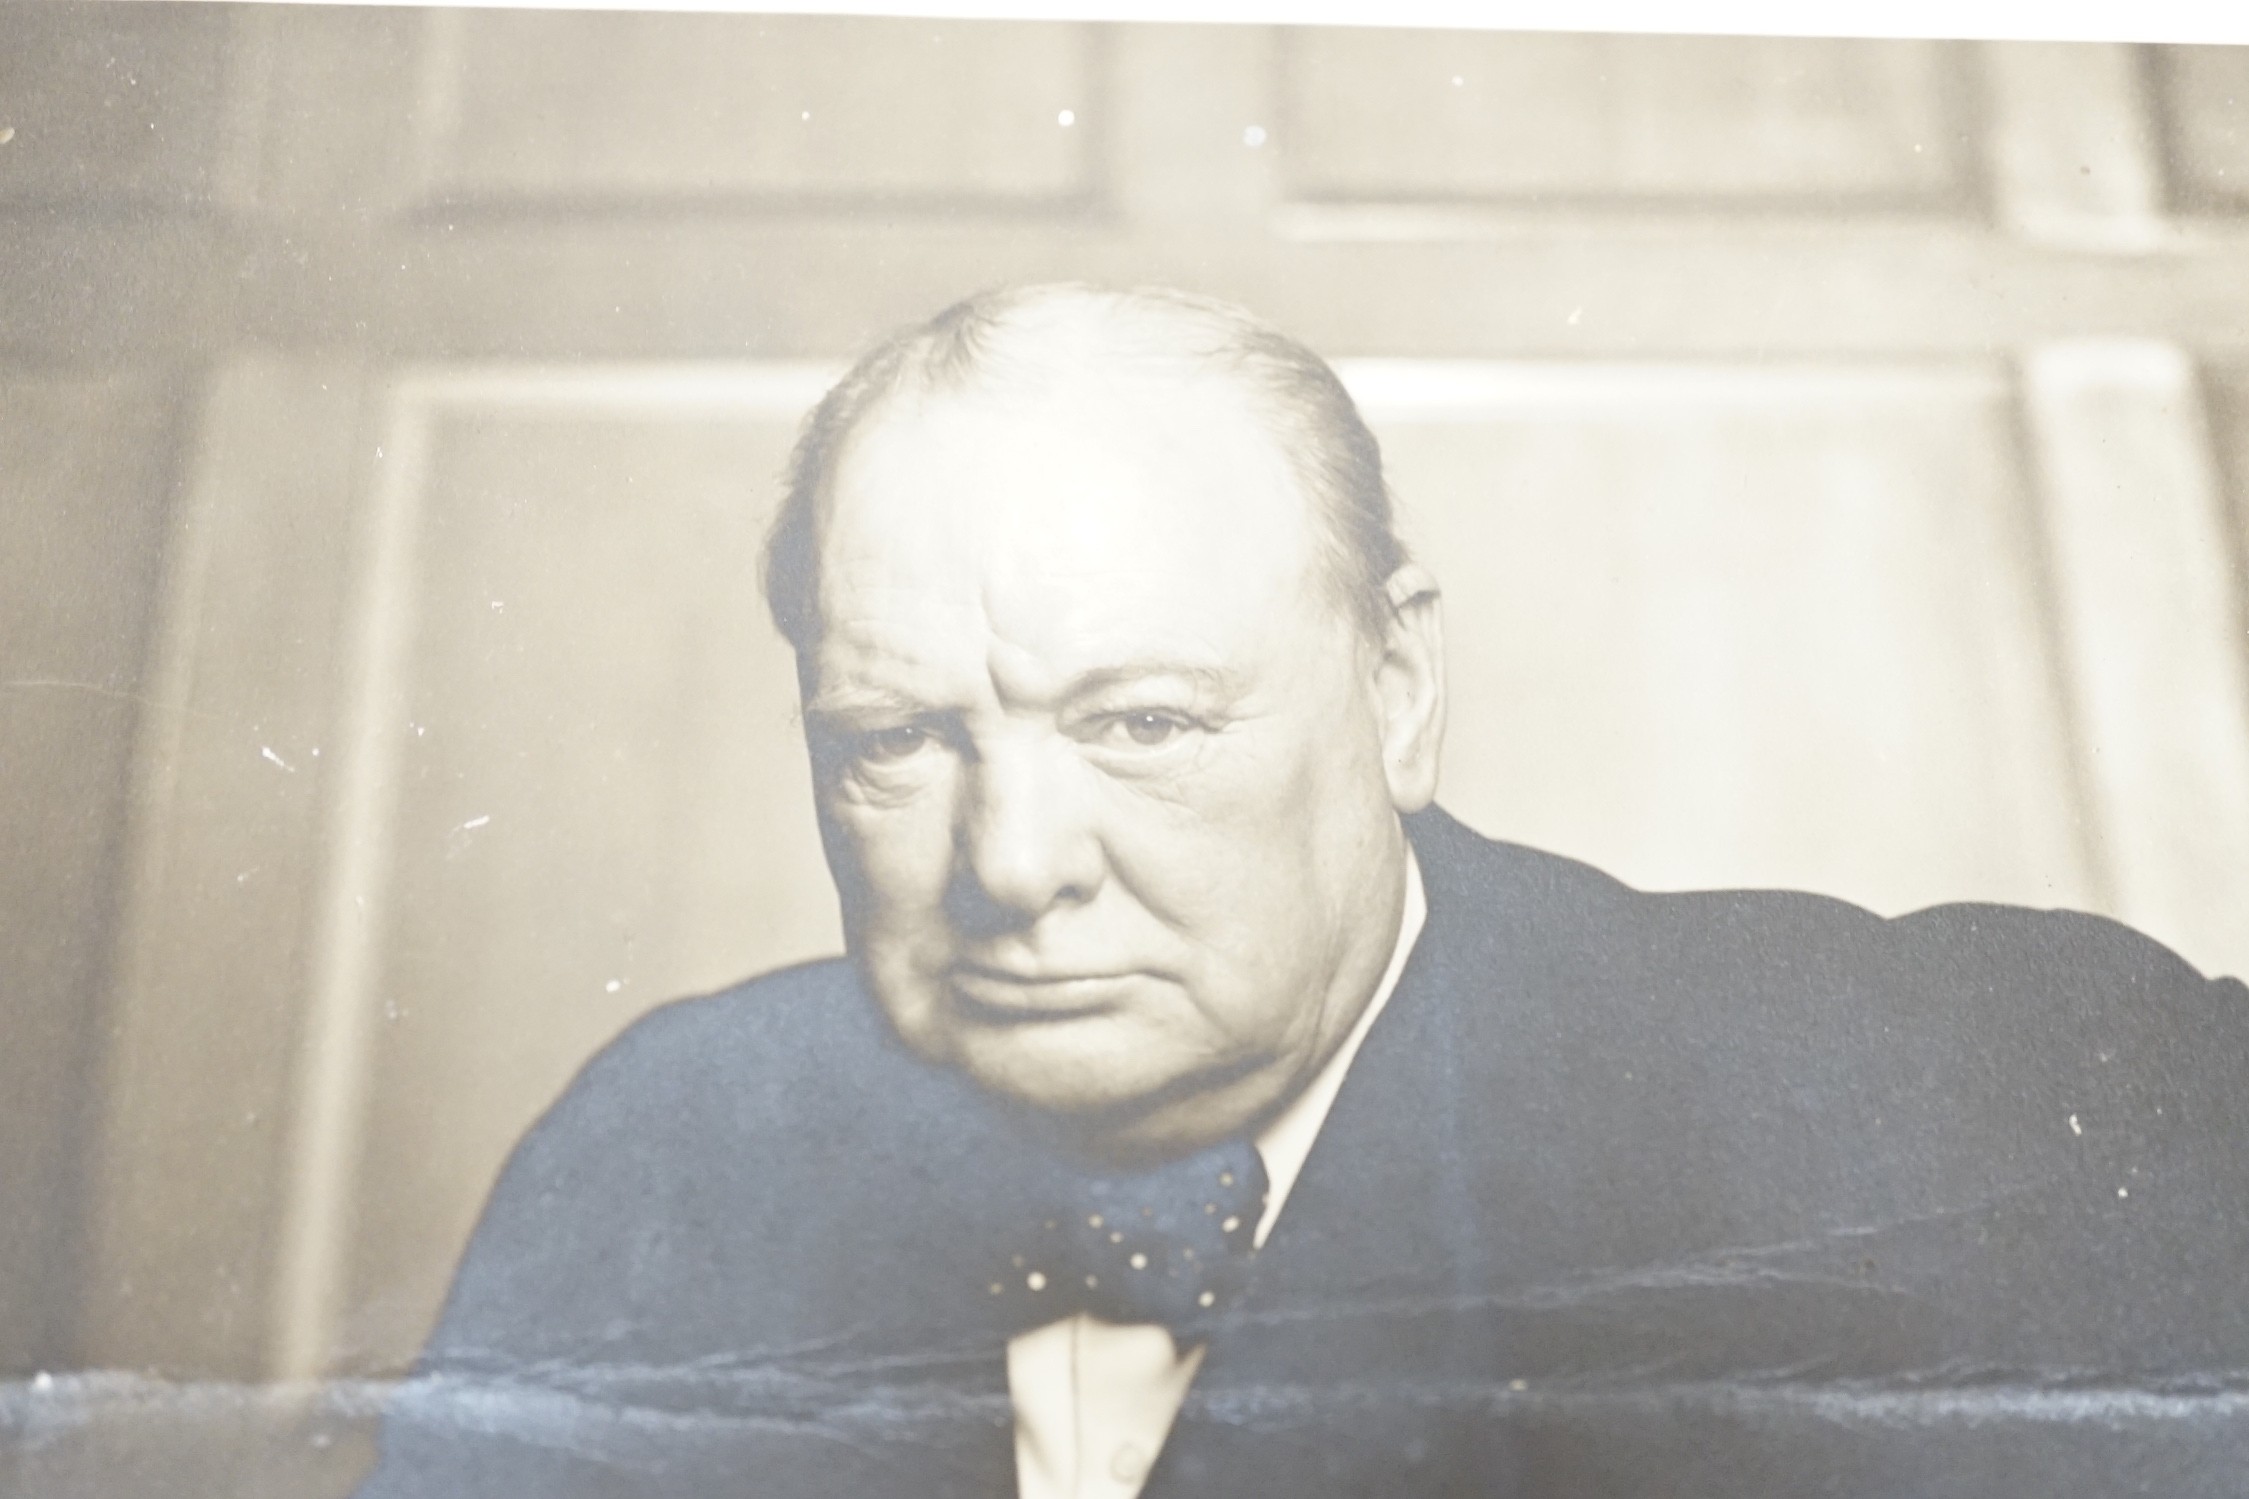 Yousuf Karsh, Ottawa, photo of Winston S. Churchill, signed by photographer - Image 3 of 4